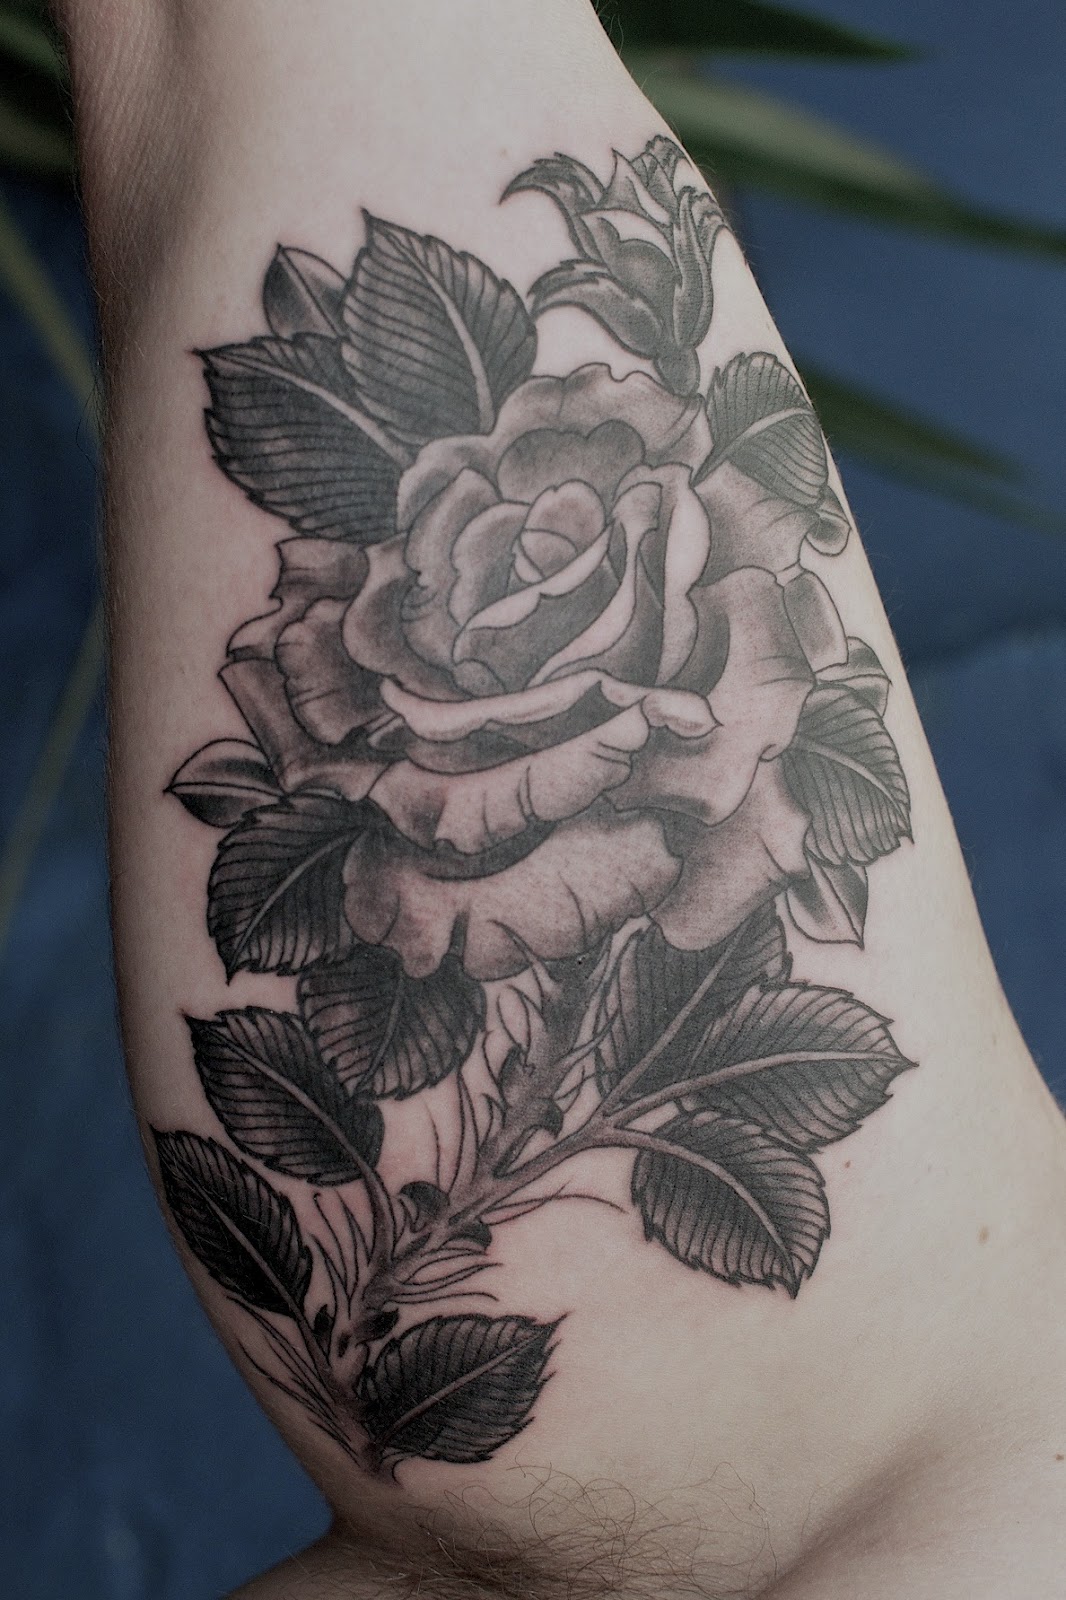 geometric-rose-tattoo-design-new